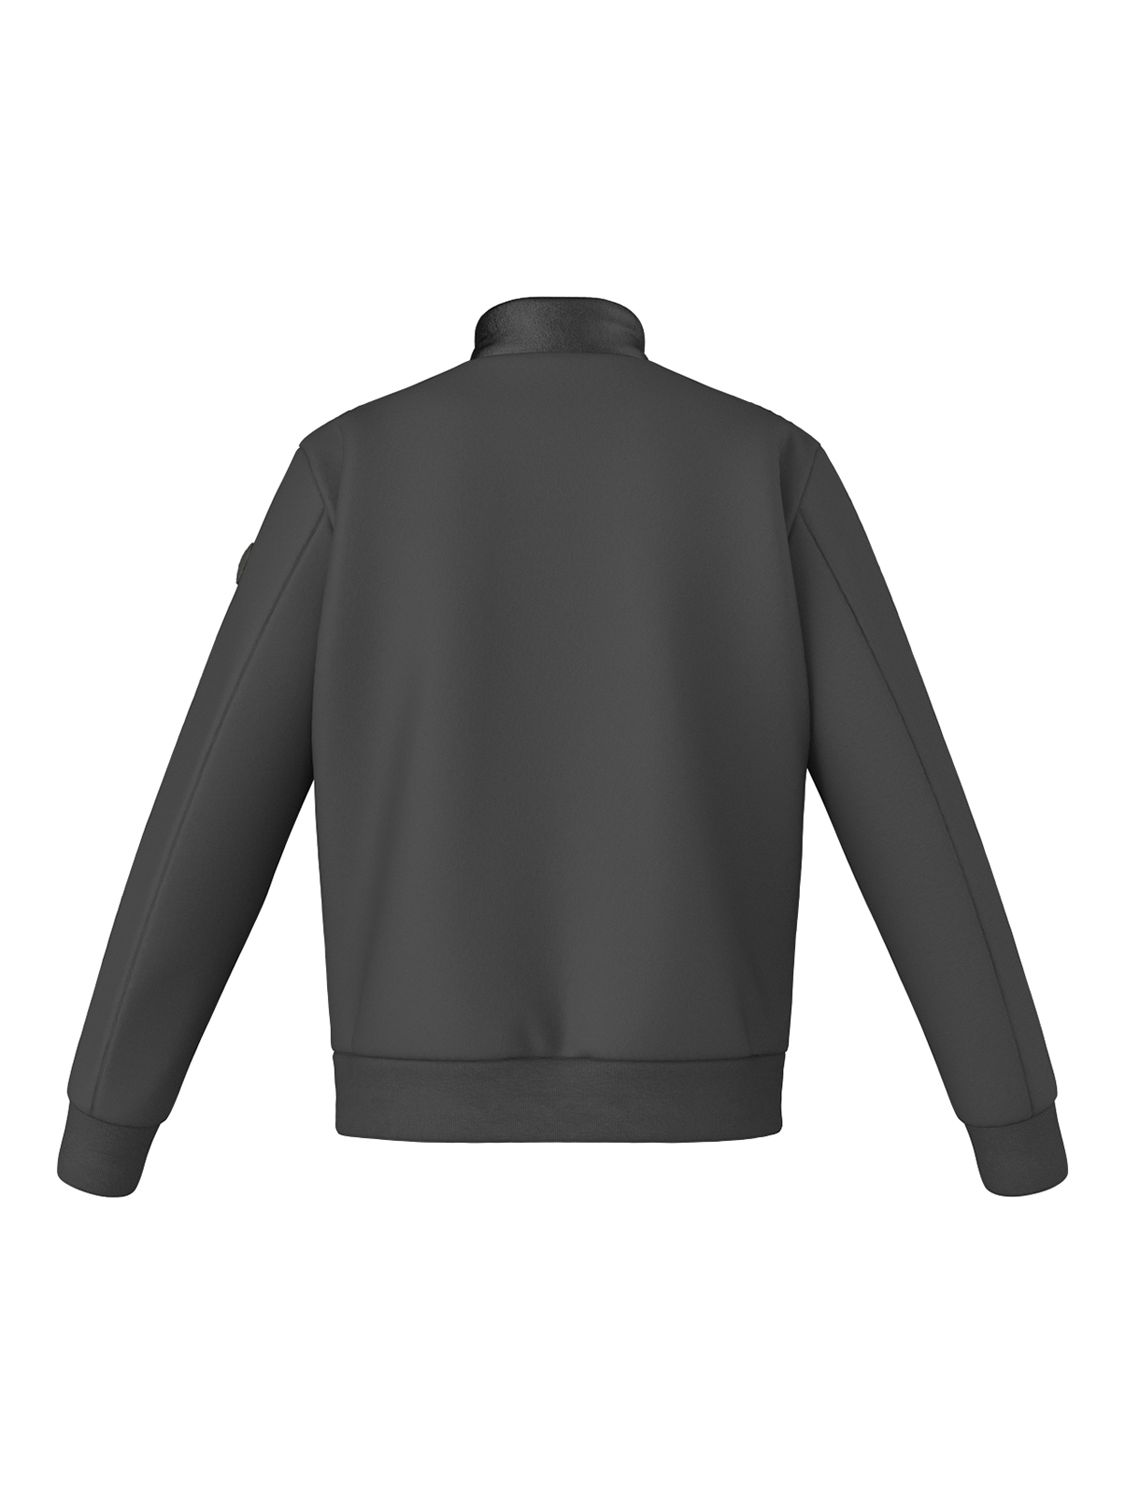 JOOP! Boros Puffer Jacket, Black, 38R